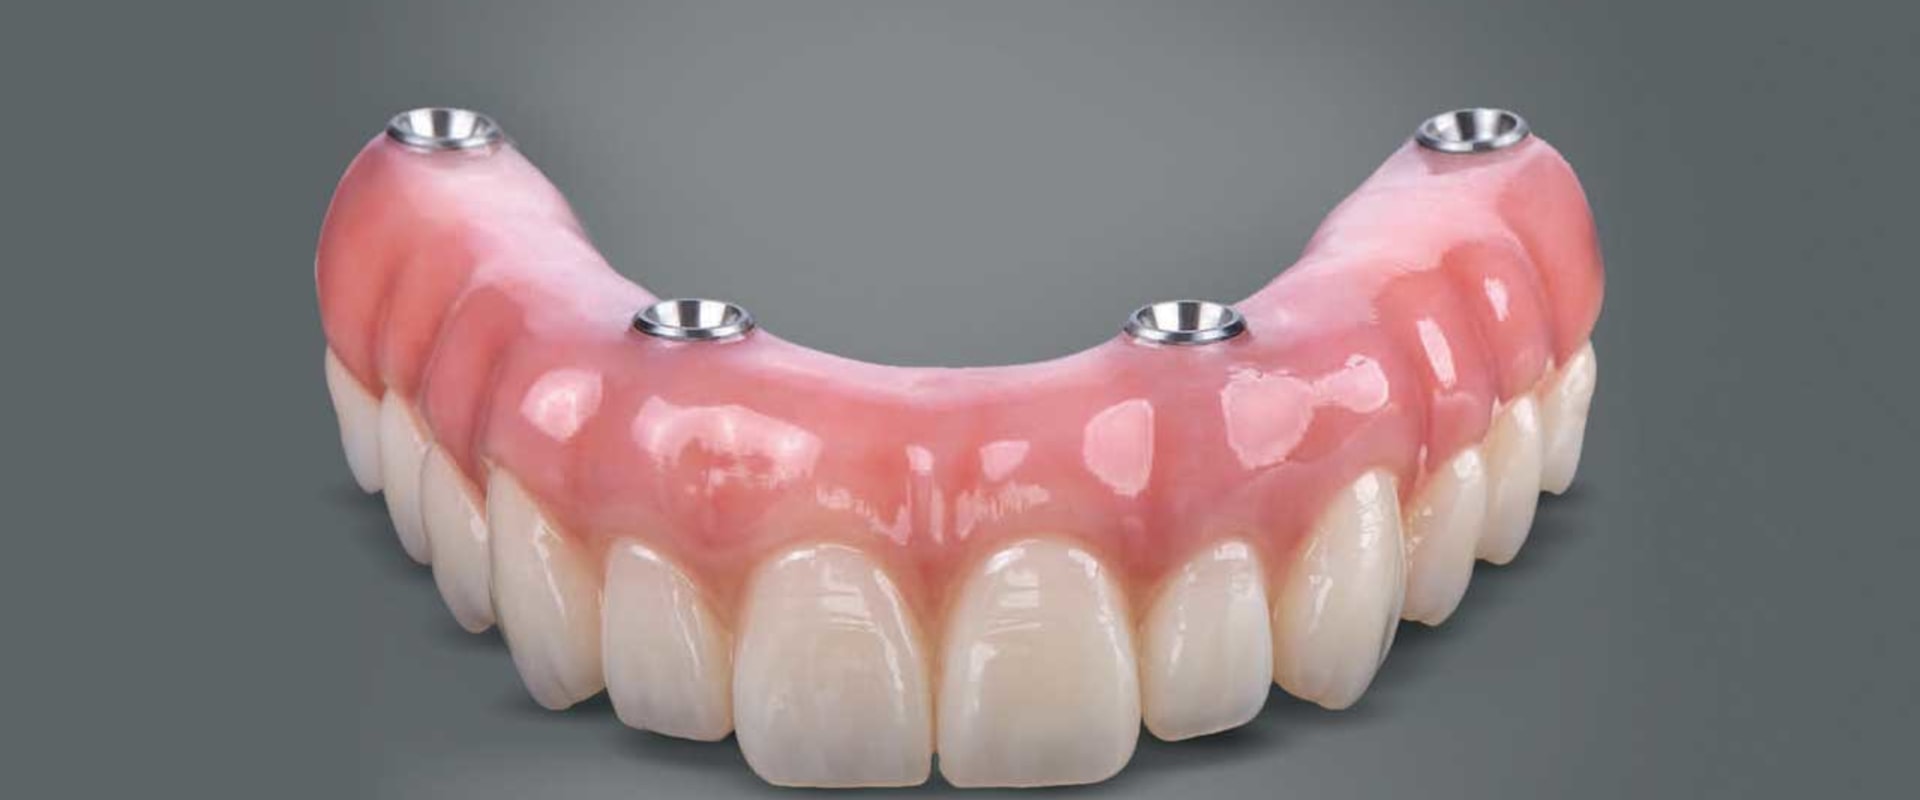 How Long Do All-on-4 Dental Implants Last?